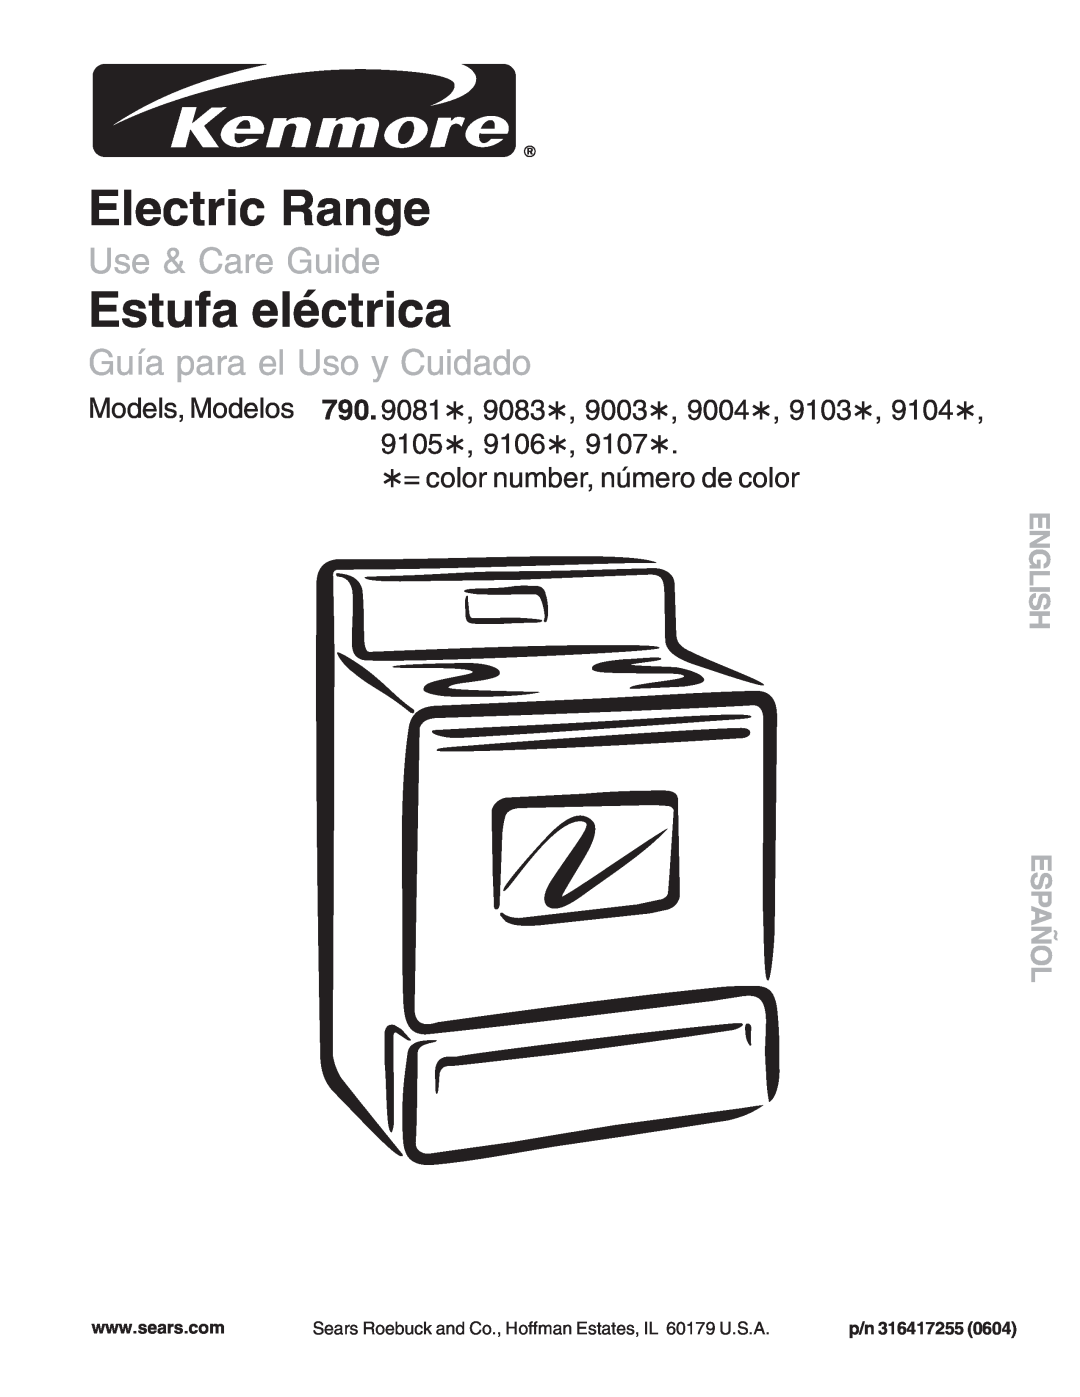 Kenmore 790.9003 manual English Español, Sears Roebuck and Co., Hoffman Estates, IL 60179 U.S.A, p/n, Electric Range 